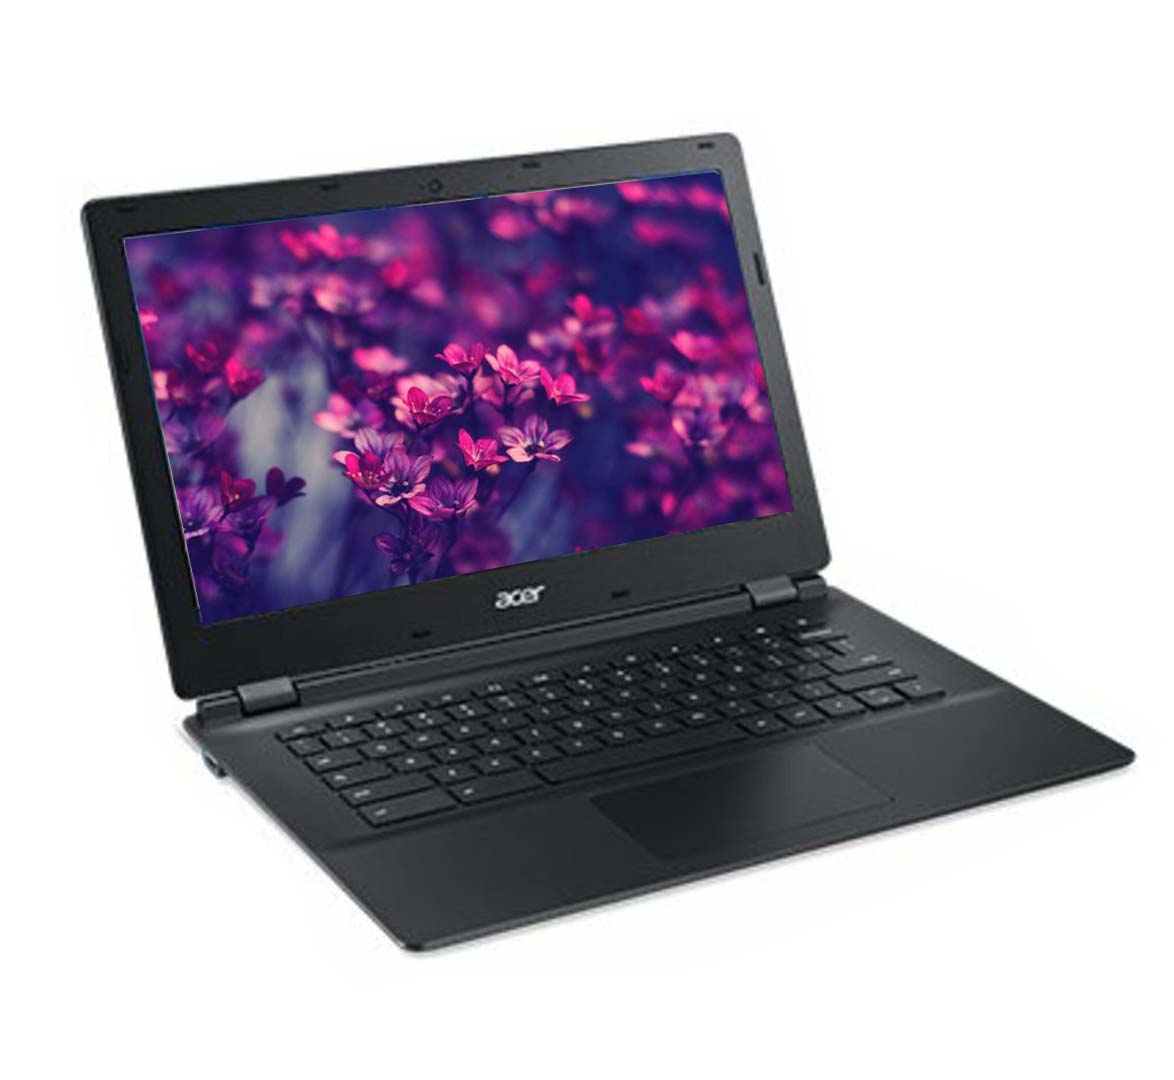 Acer Chromebook 13 Business Laptop, Intel Celeron N Series CPU, 2GB RAM, 16GB HDD, 13.3 inch Display, Windows 10 Pro, Refurbished Laptop